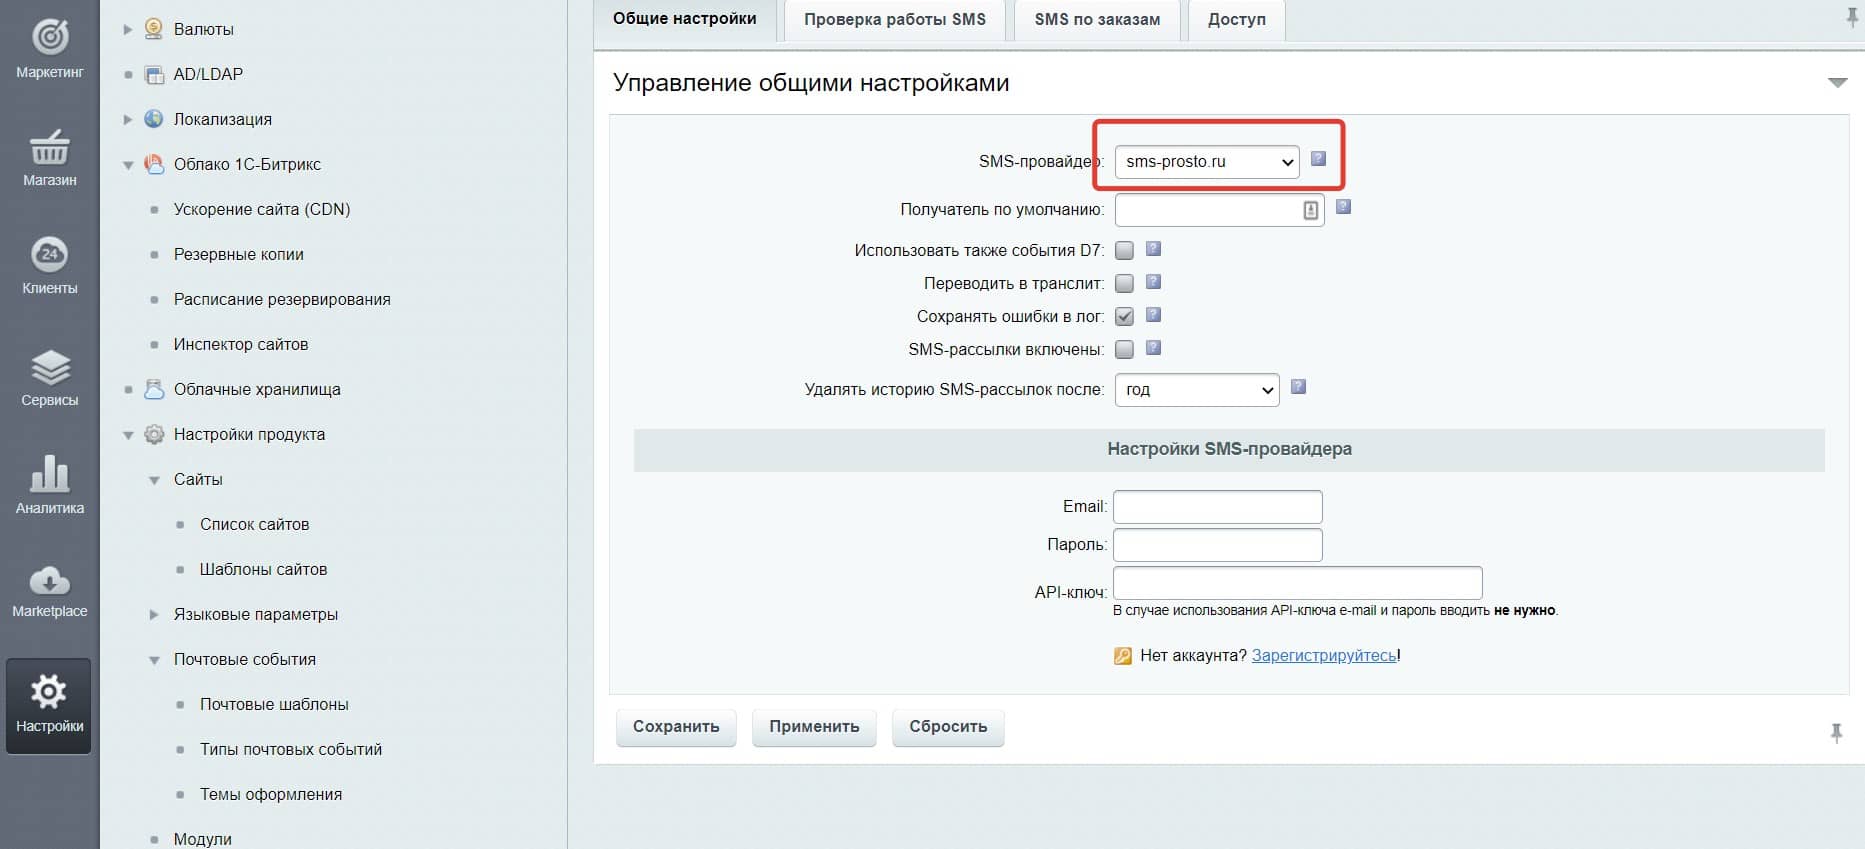 В графе «SMS-провайдер» выберите наш сервис sms-prosto.ru